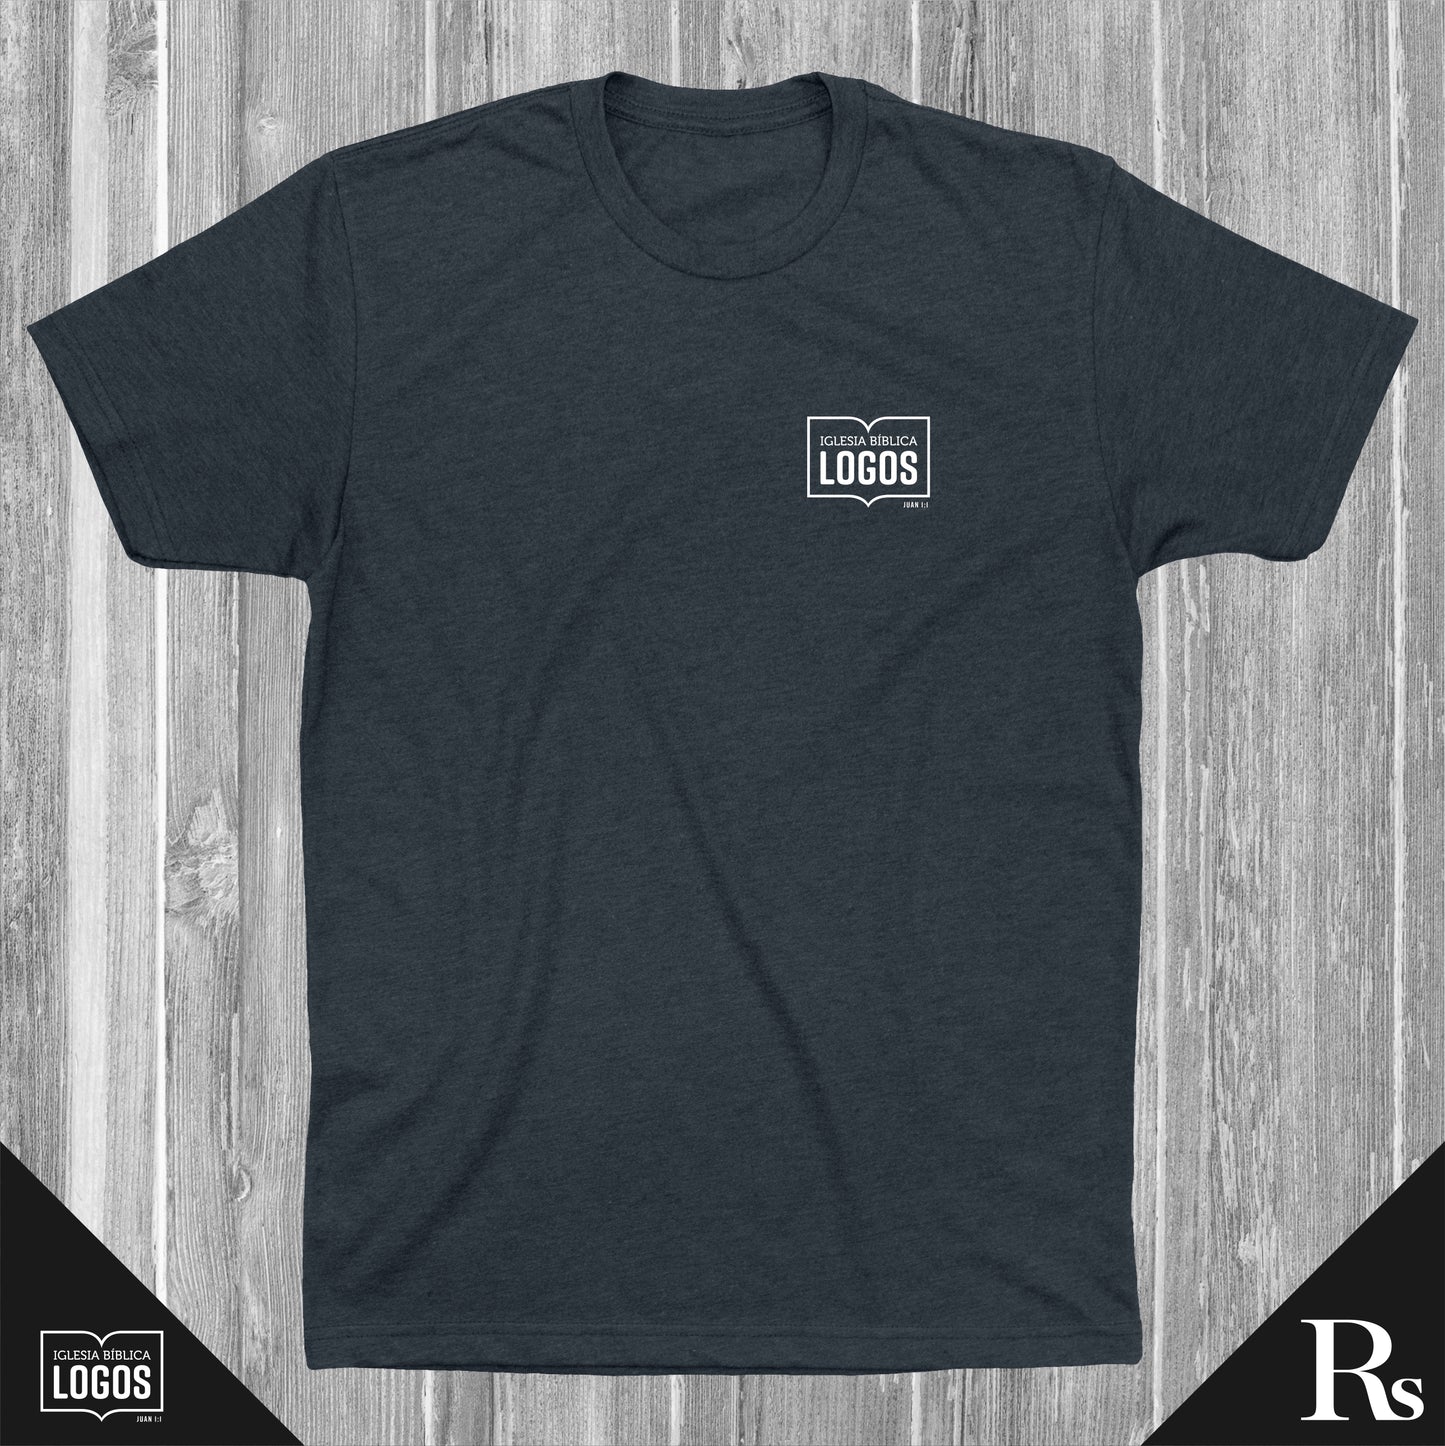 Iglesia Biblica Logos HEATHER NAVY | Rs T-shirts